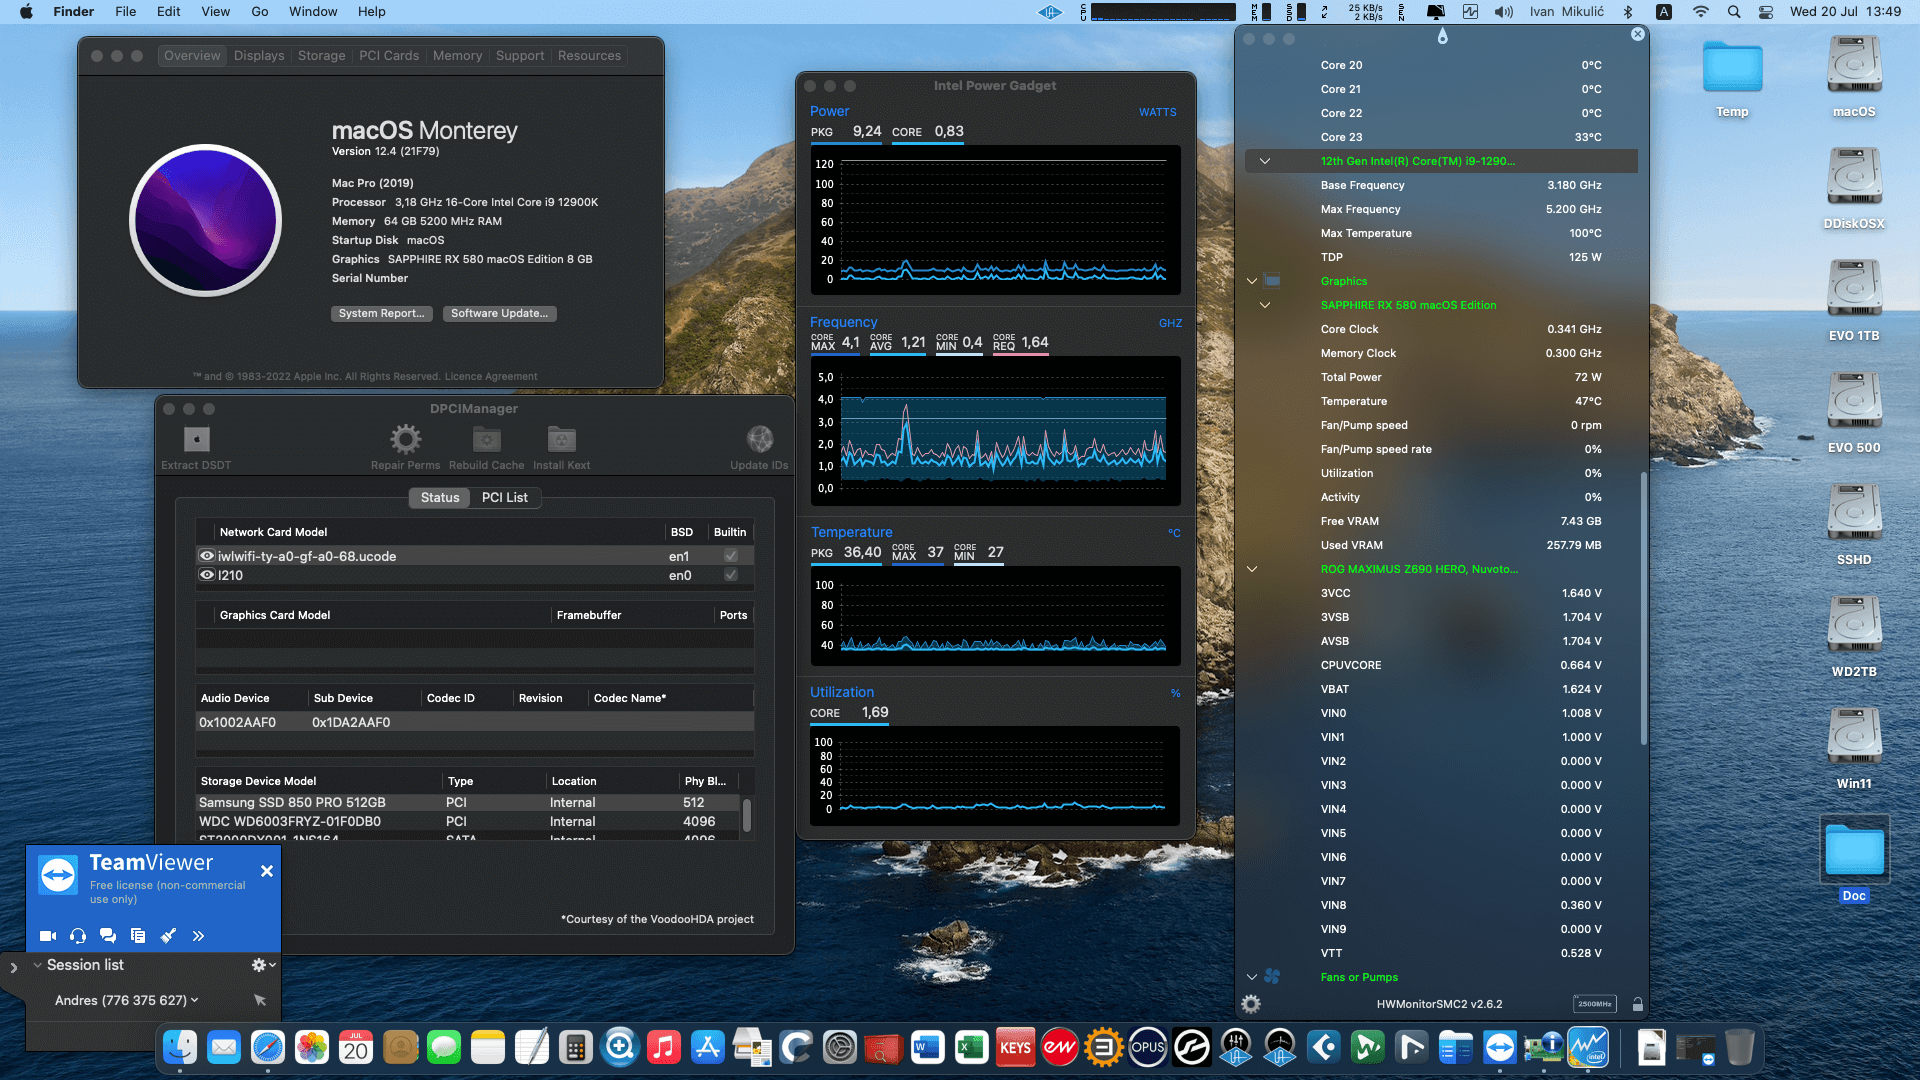 Success Hackintosh macOS Monterey 12.4 Build 21F79 in Asus ROG Maximus Z690 Hero + Intel Core i9 12900K + Sapphire RX 580